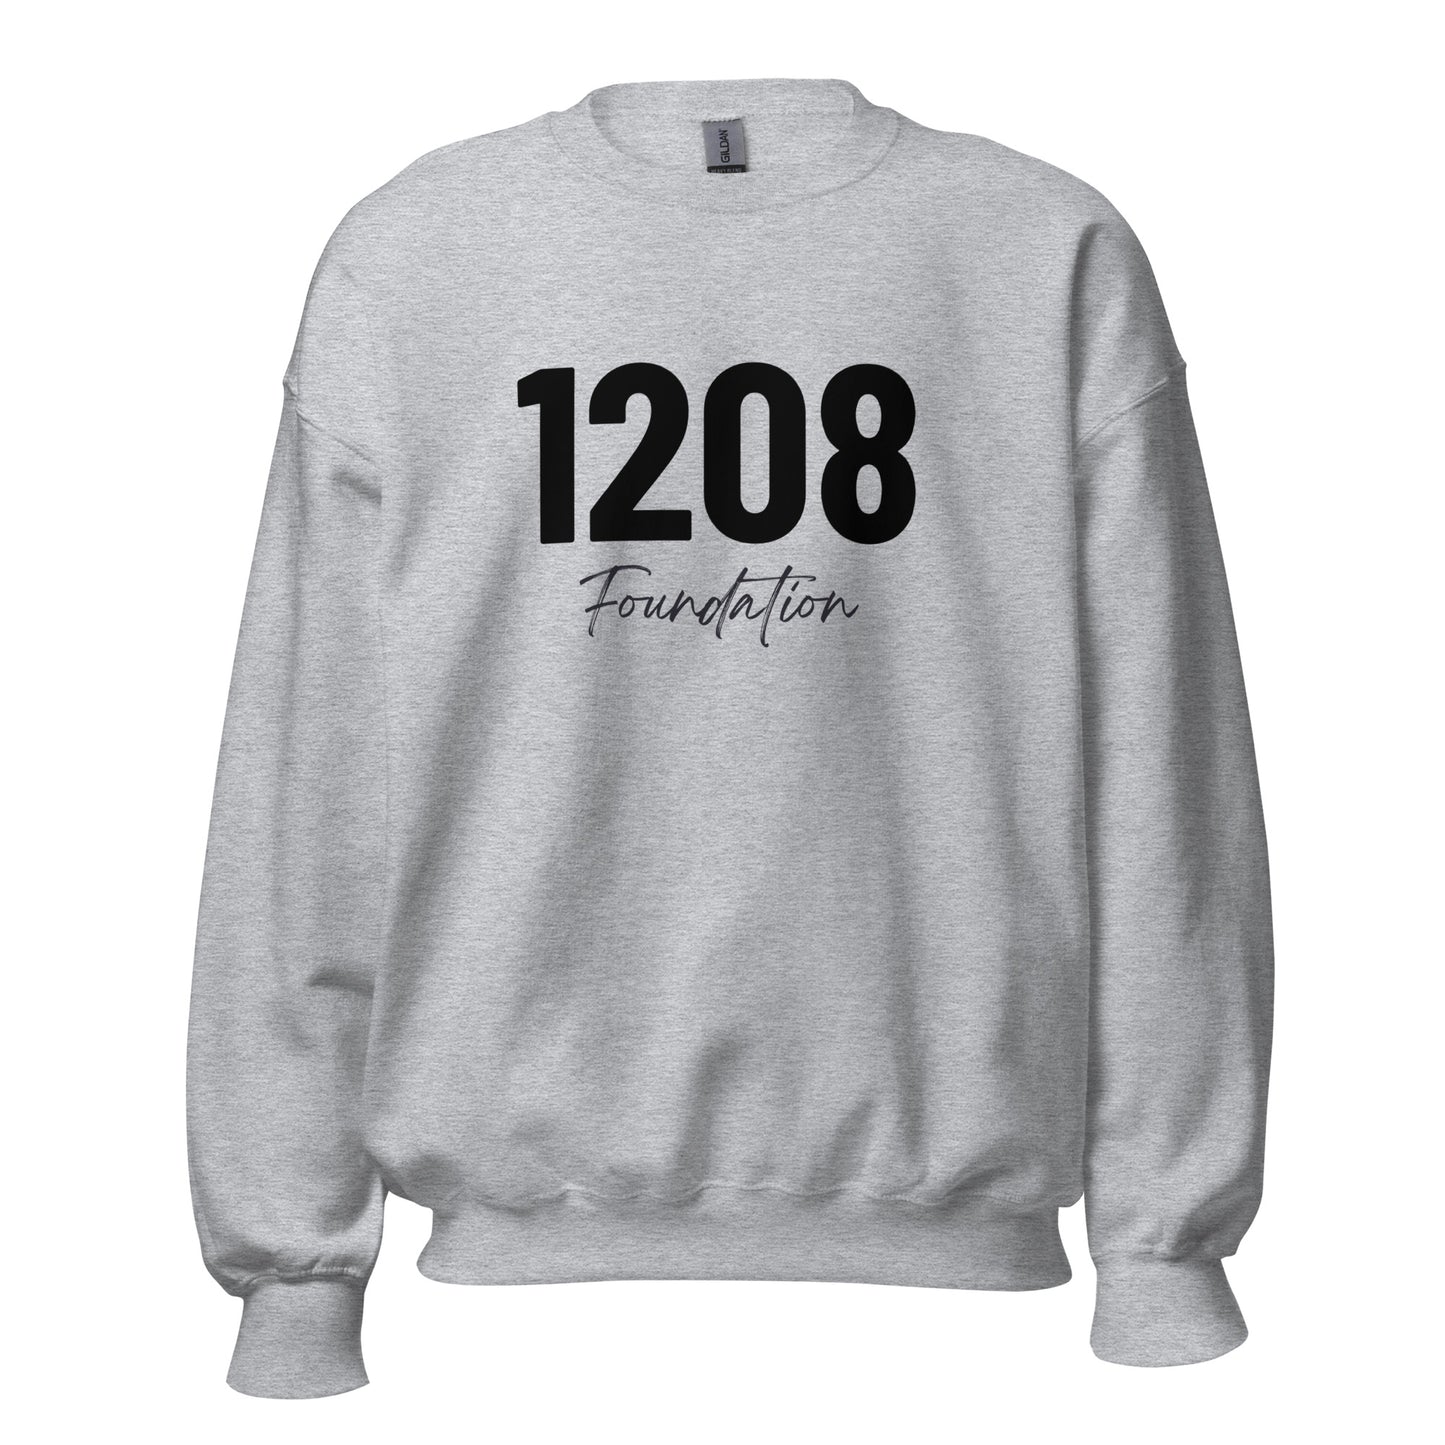 1208 Foundation | Women's Crewneck Sweatshirt